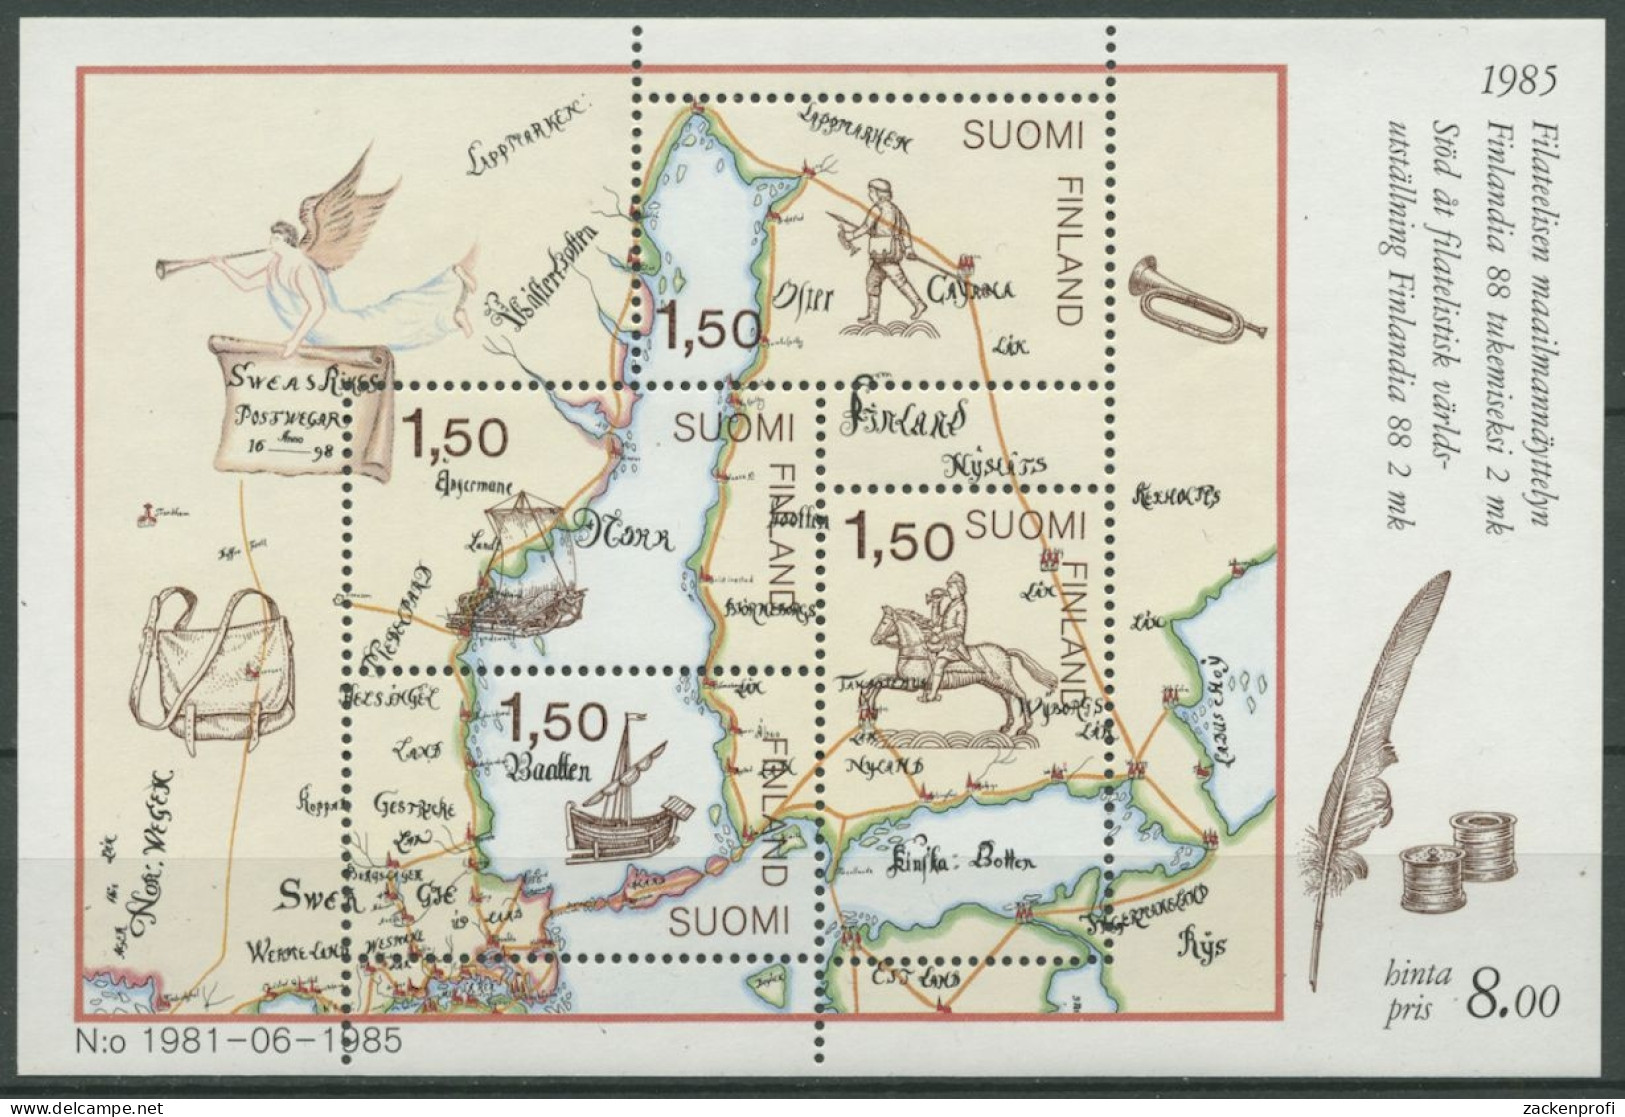 Finnland 1985 FINLANDIA Post Im 17. Jh. Landkarte Block 1 Postfrisch (C25895) - Blocks & Sheetlets